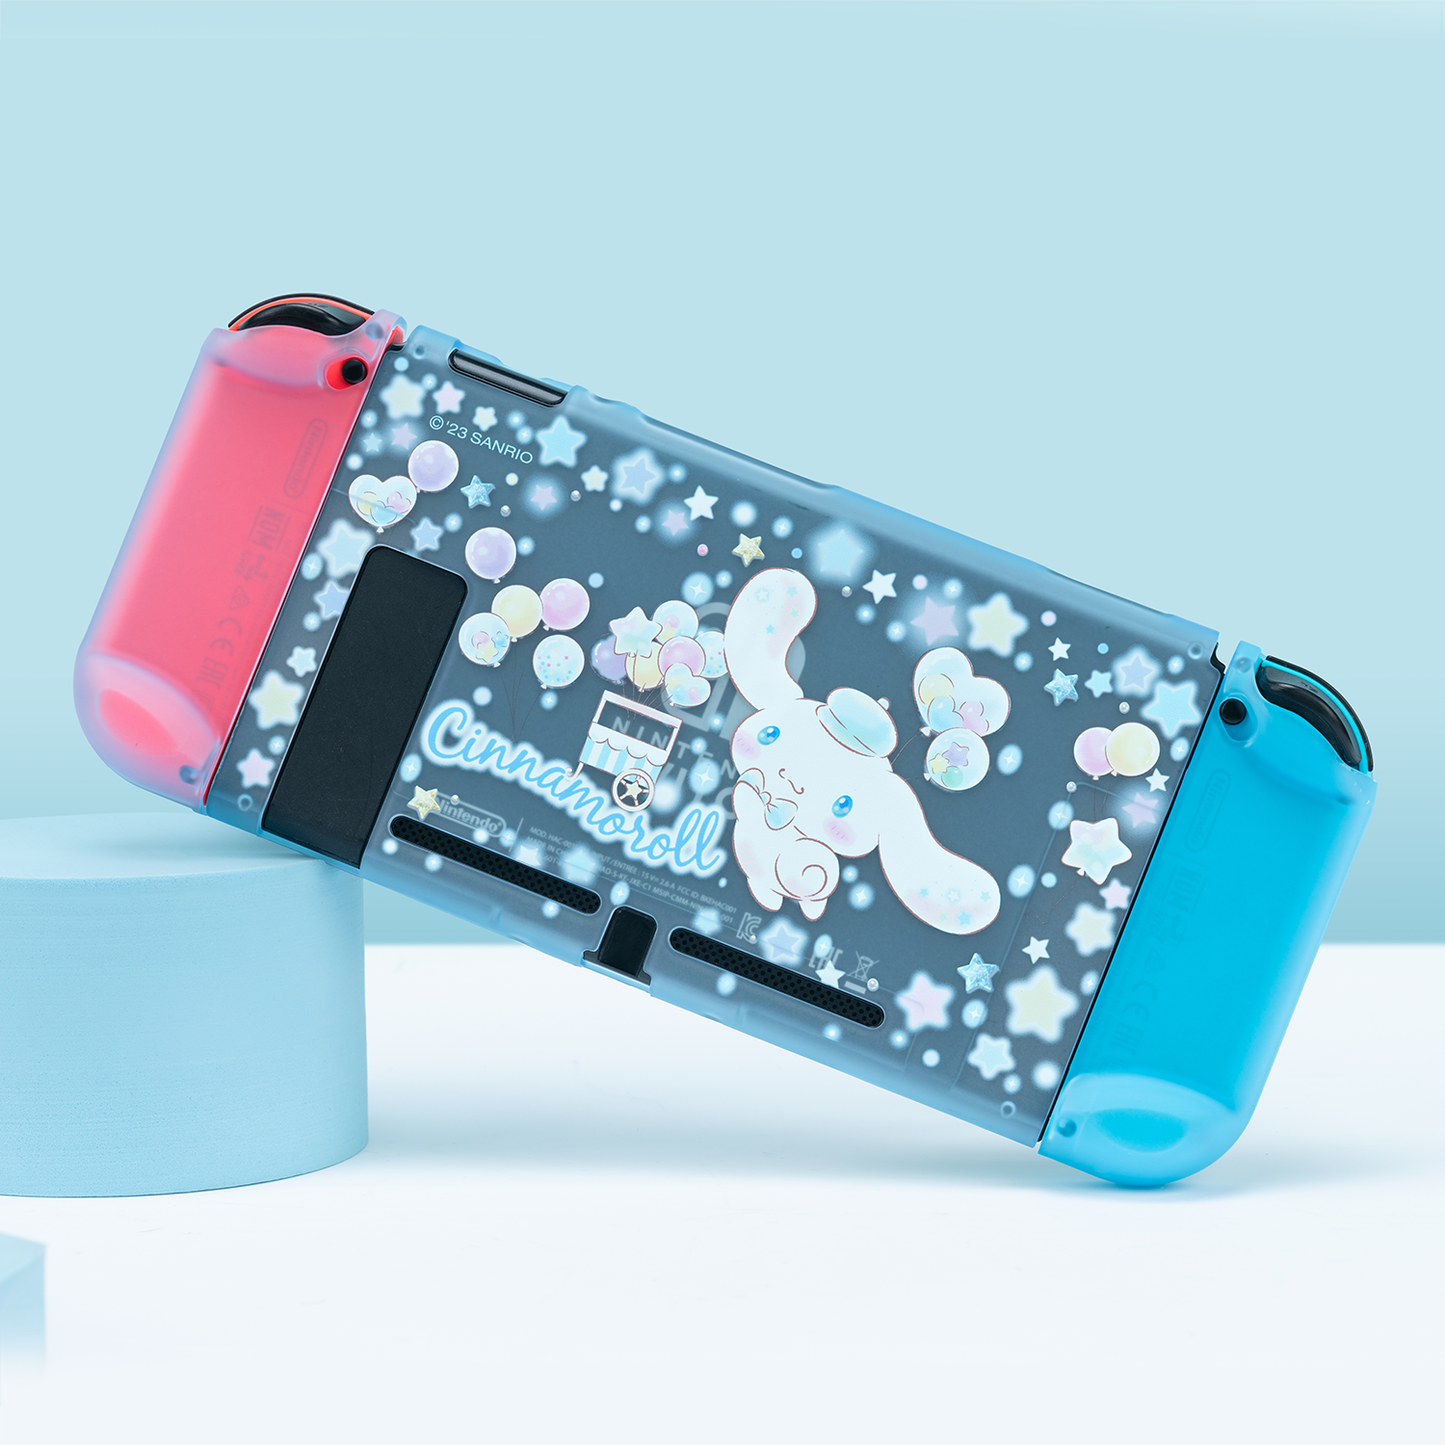 GeekShare Sanrio Series 3 Protective Case